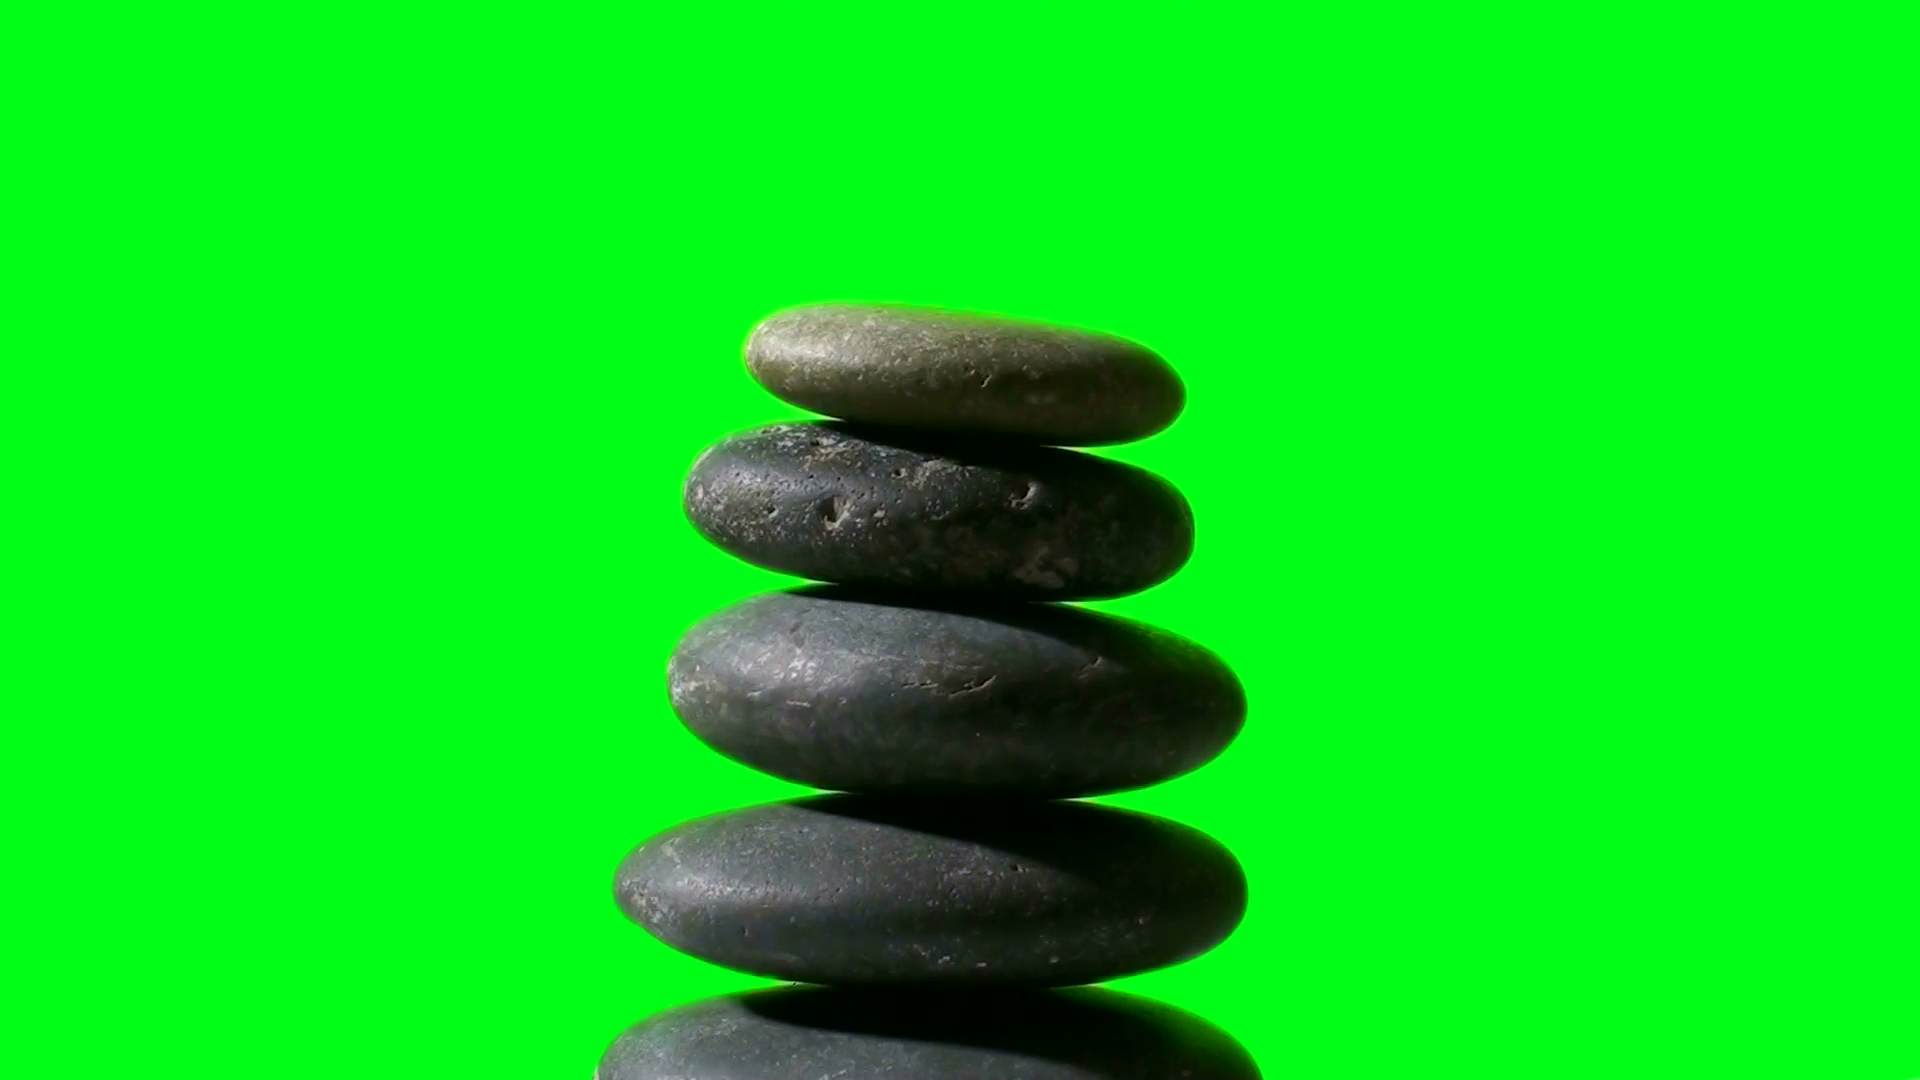 Zen rocks atop motion green screen V1 - HD Stock Video Footage ...